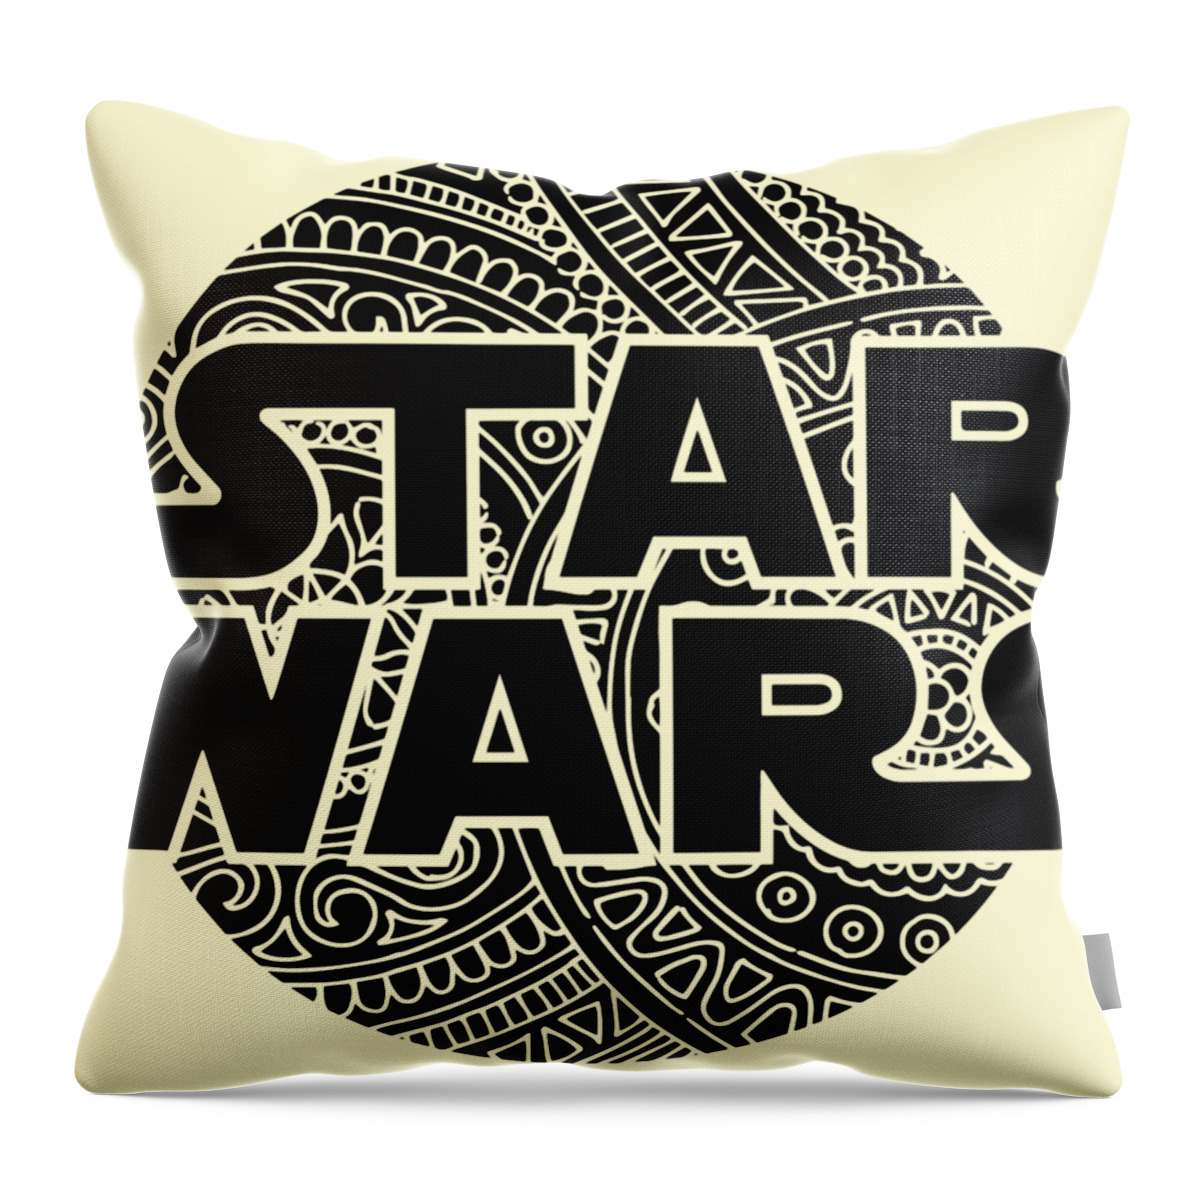 Star Wars Throw Pillow featuring the mixed media Star Wars Art - Logo - Black by Studio Grafiikka